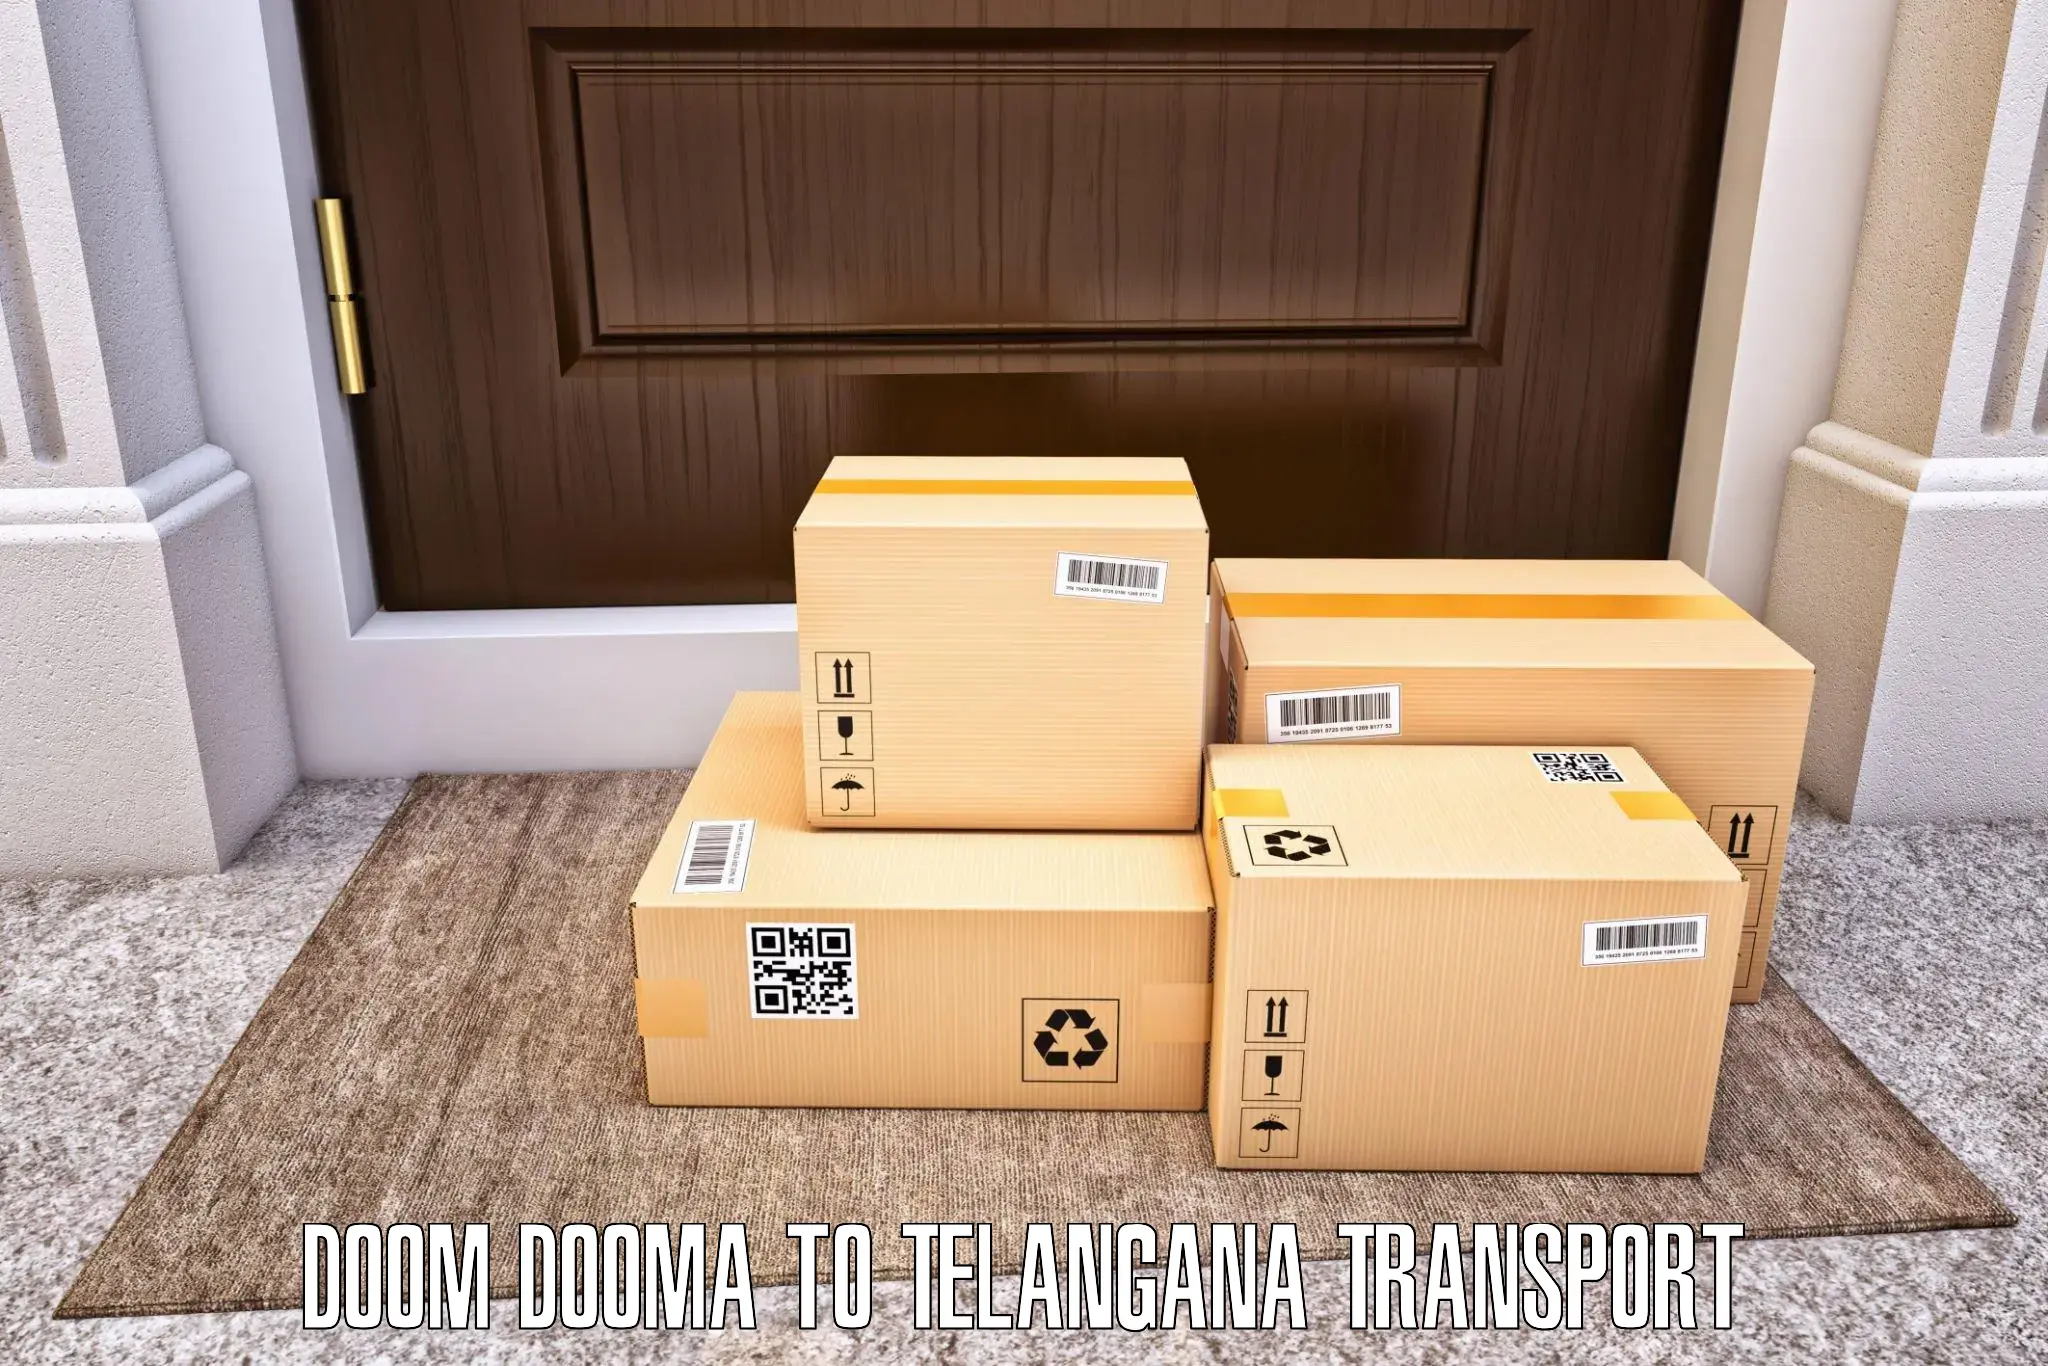 Vehicle parcel service Doom Dooma to Yacharam